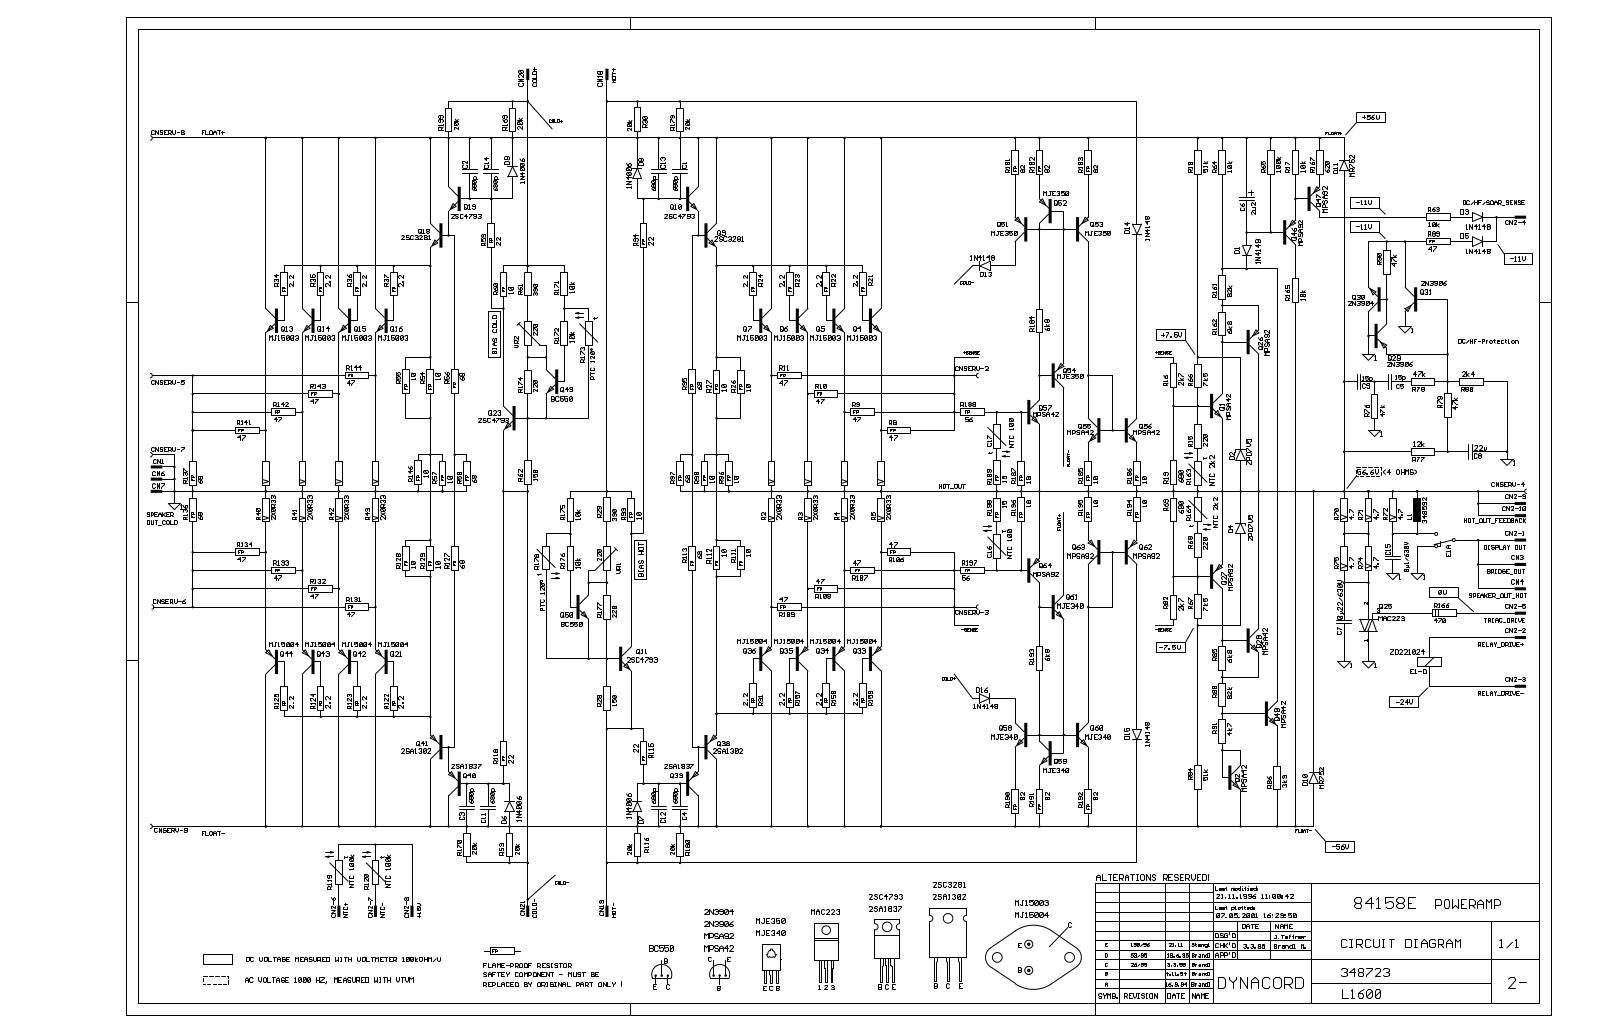 Dynacord l1600 schematic